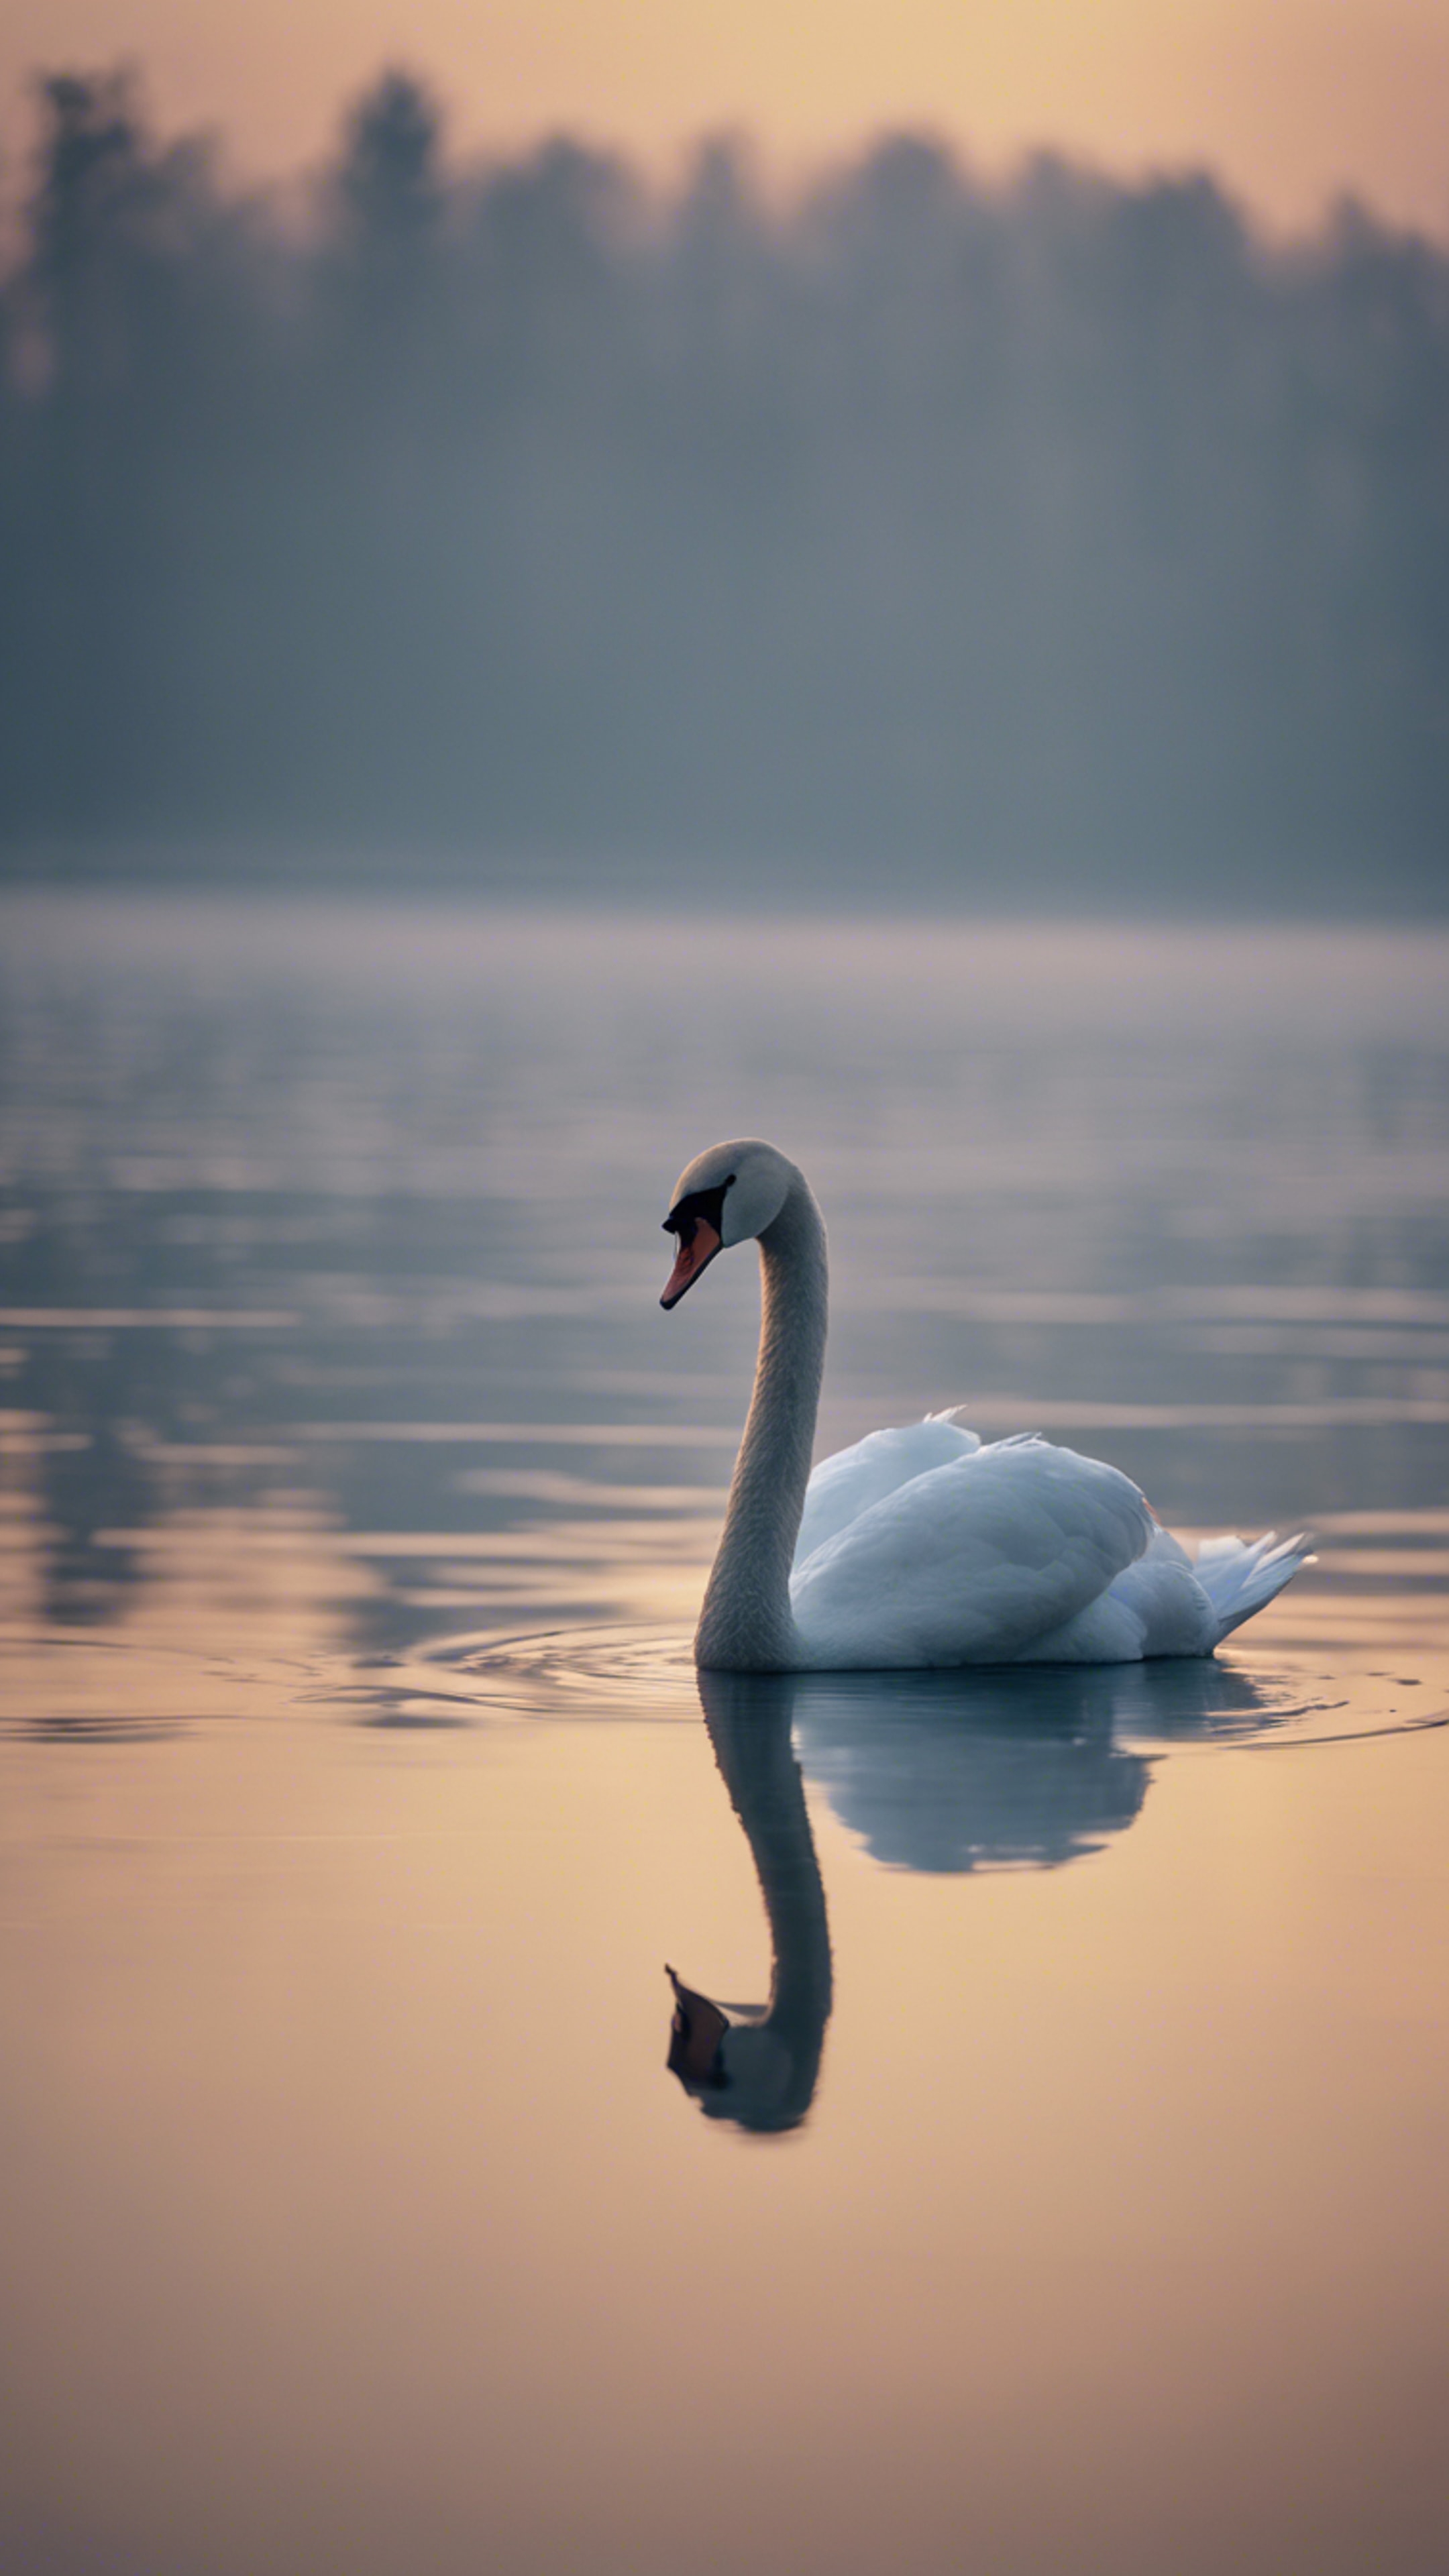 A single love-struck swan swimming alone in a desolate lake under the pallid glow of a gloomy moon. ផ្ទាំង​រូបភាព[674930fc7c9f467a8426]